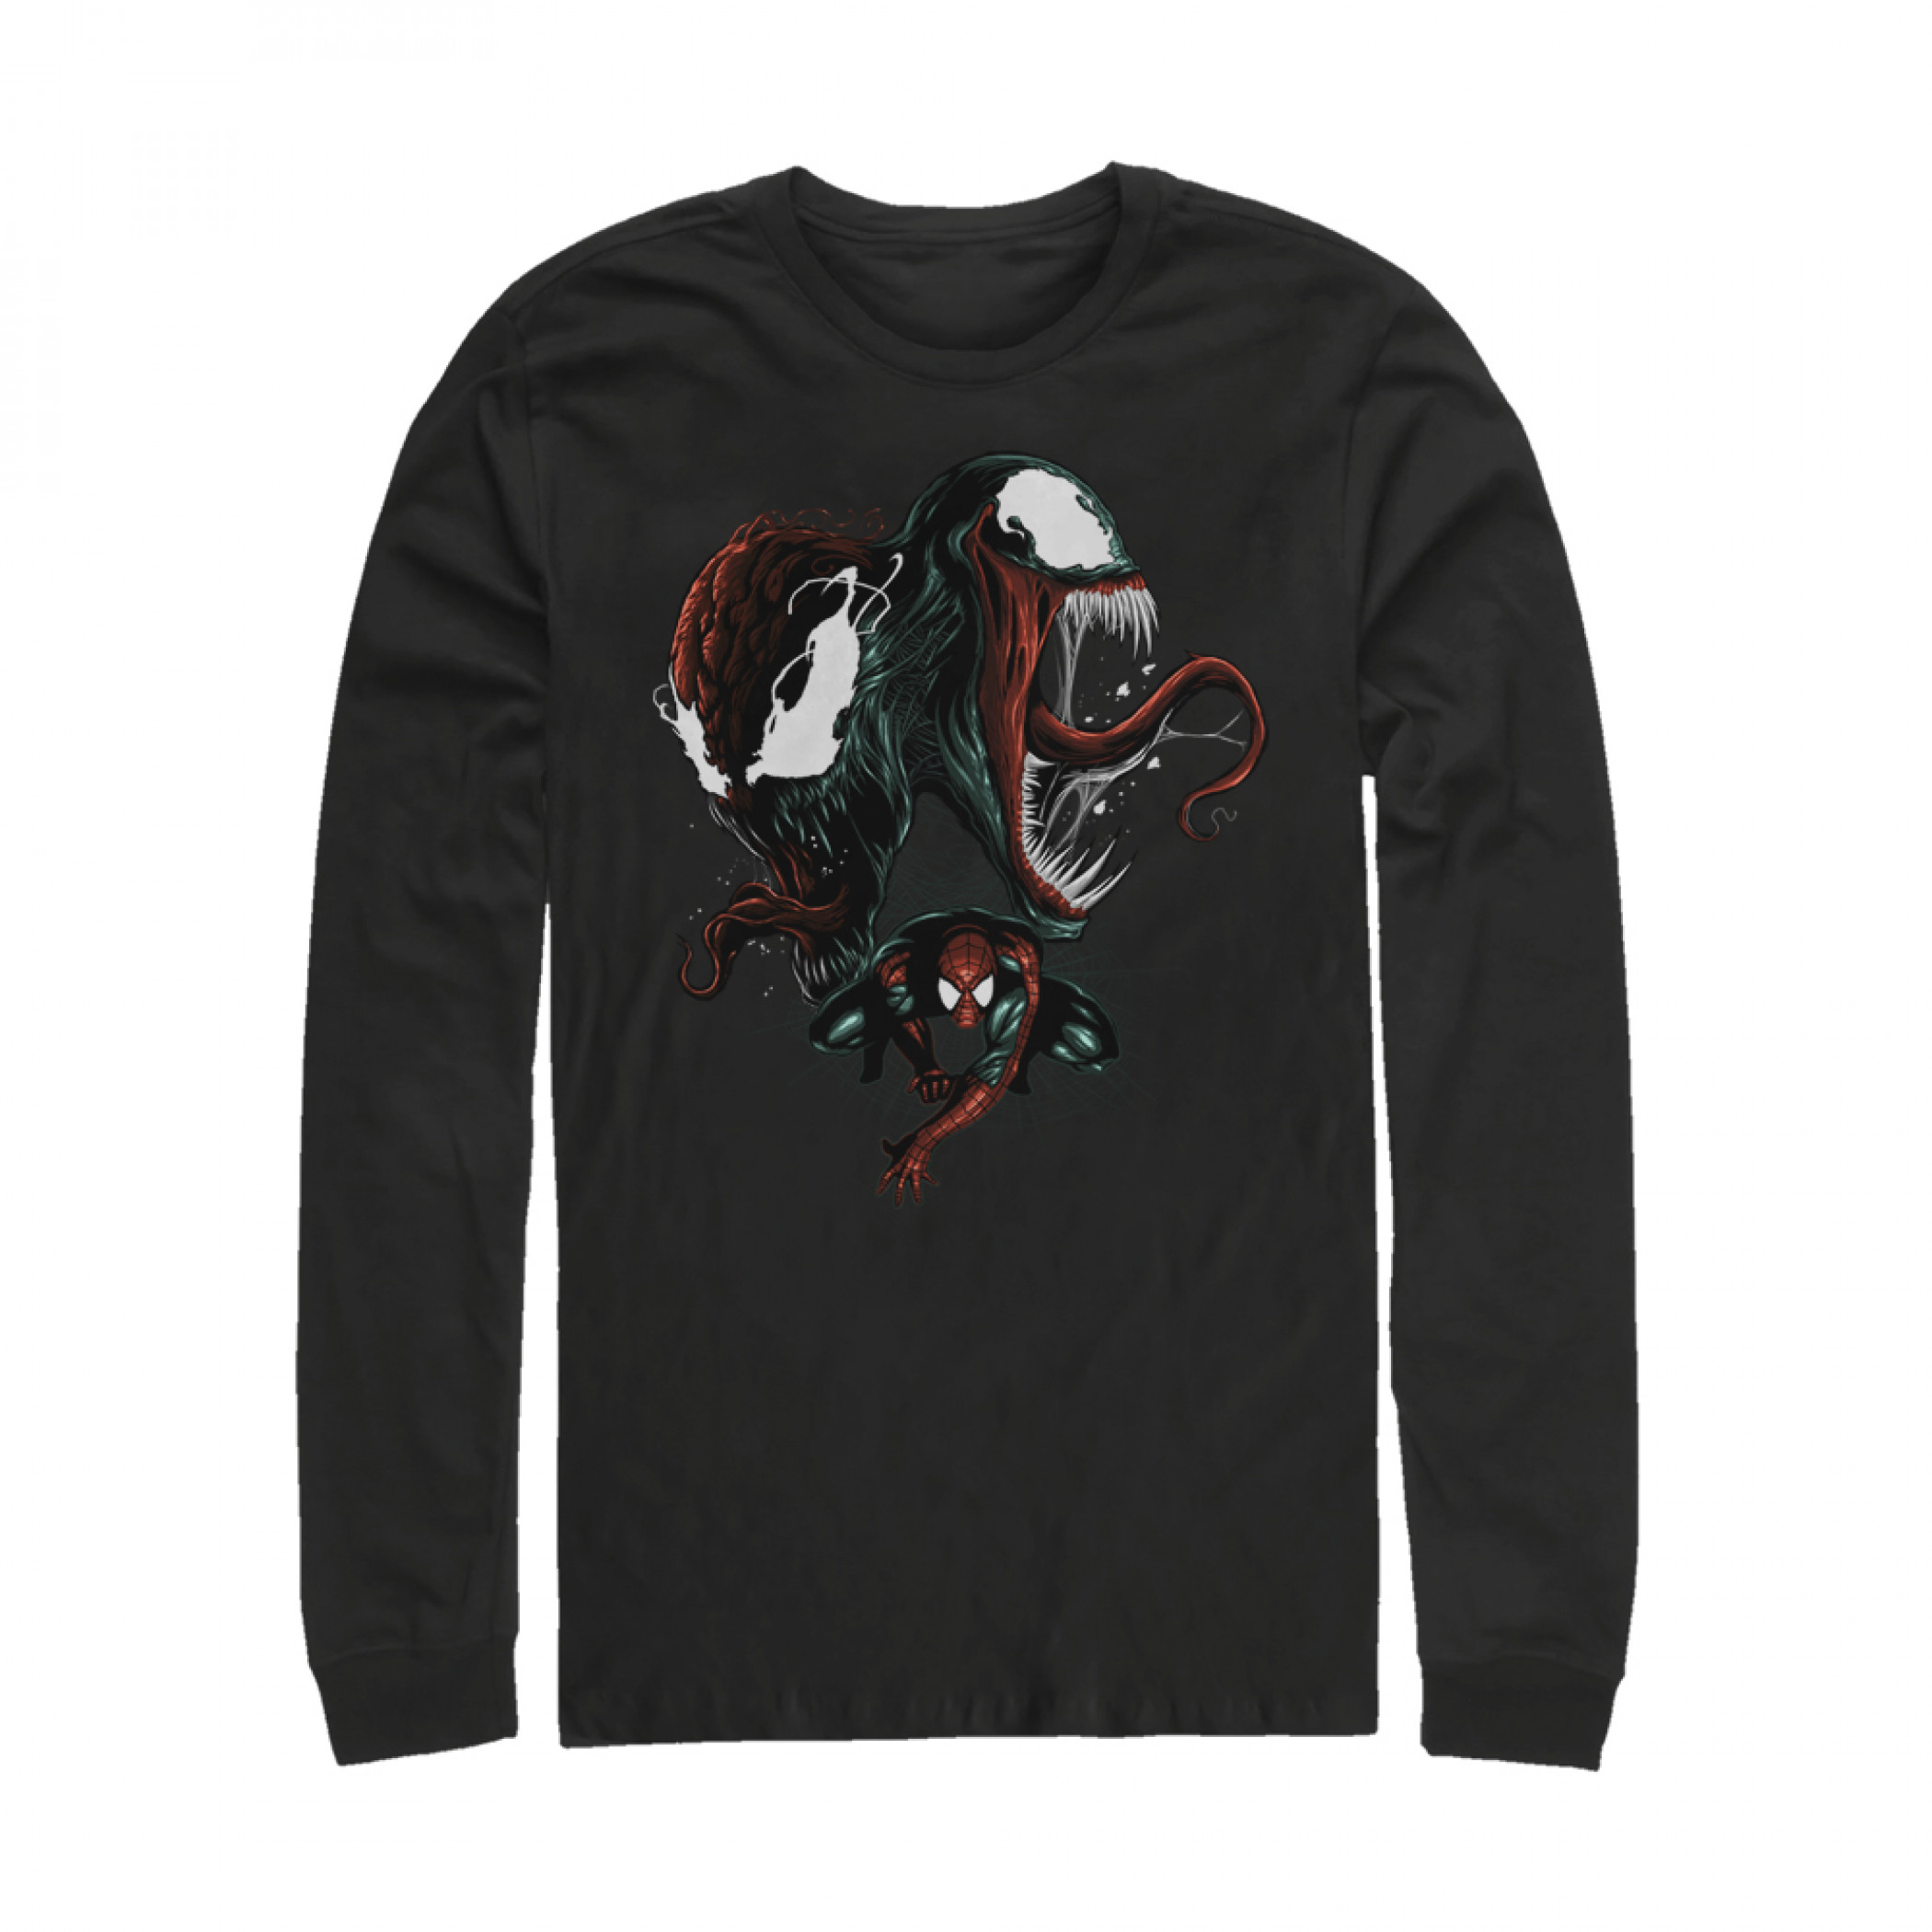 Spider-Man Venom and Carnage Bad Conscience Long Sleeve Shirt